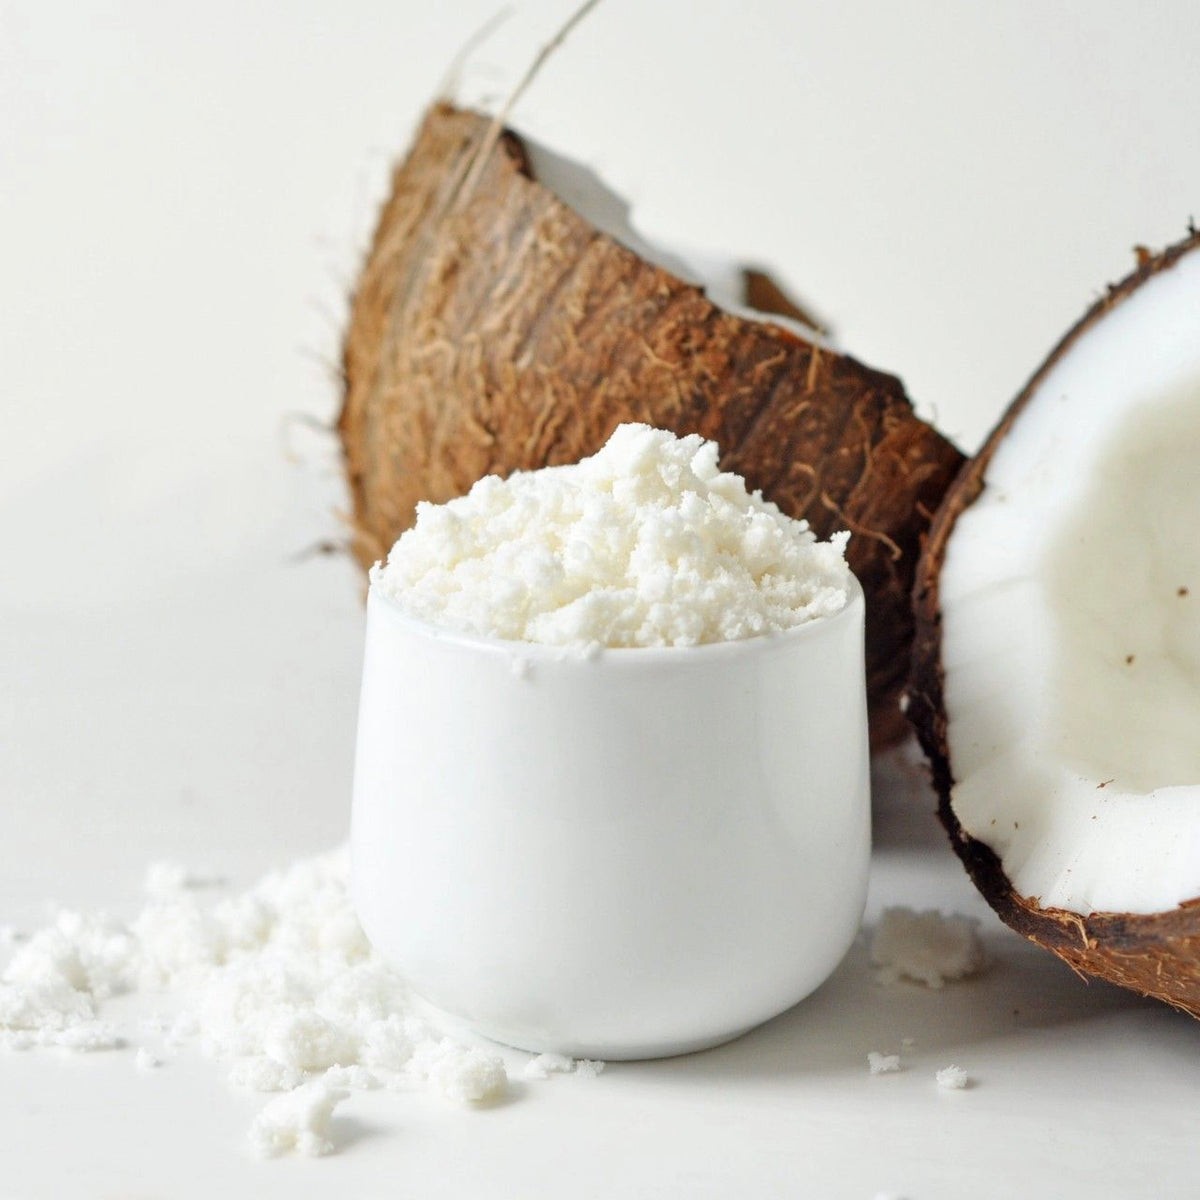 Ativo Skincare Coconut Milk Soak in Jar